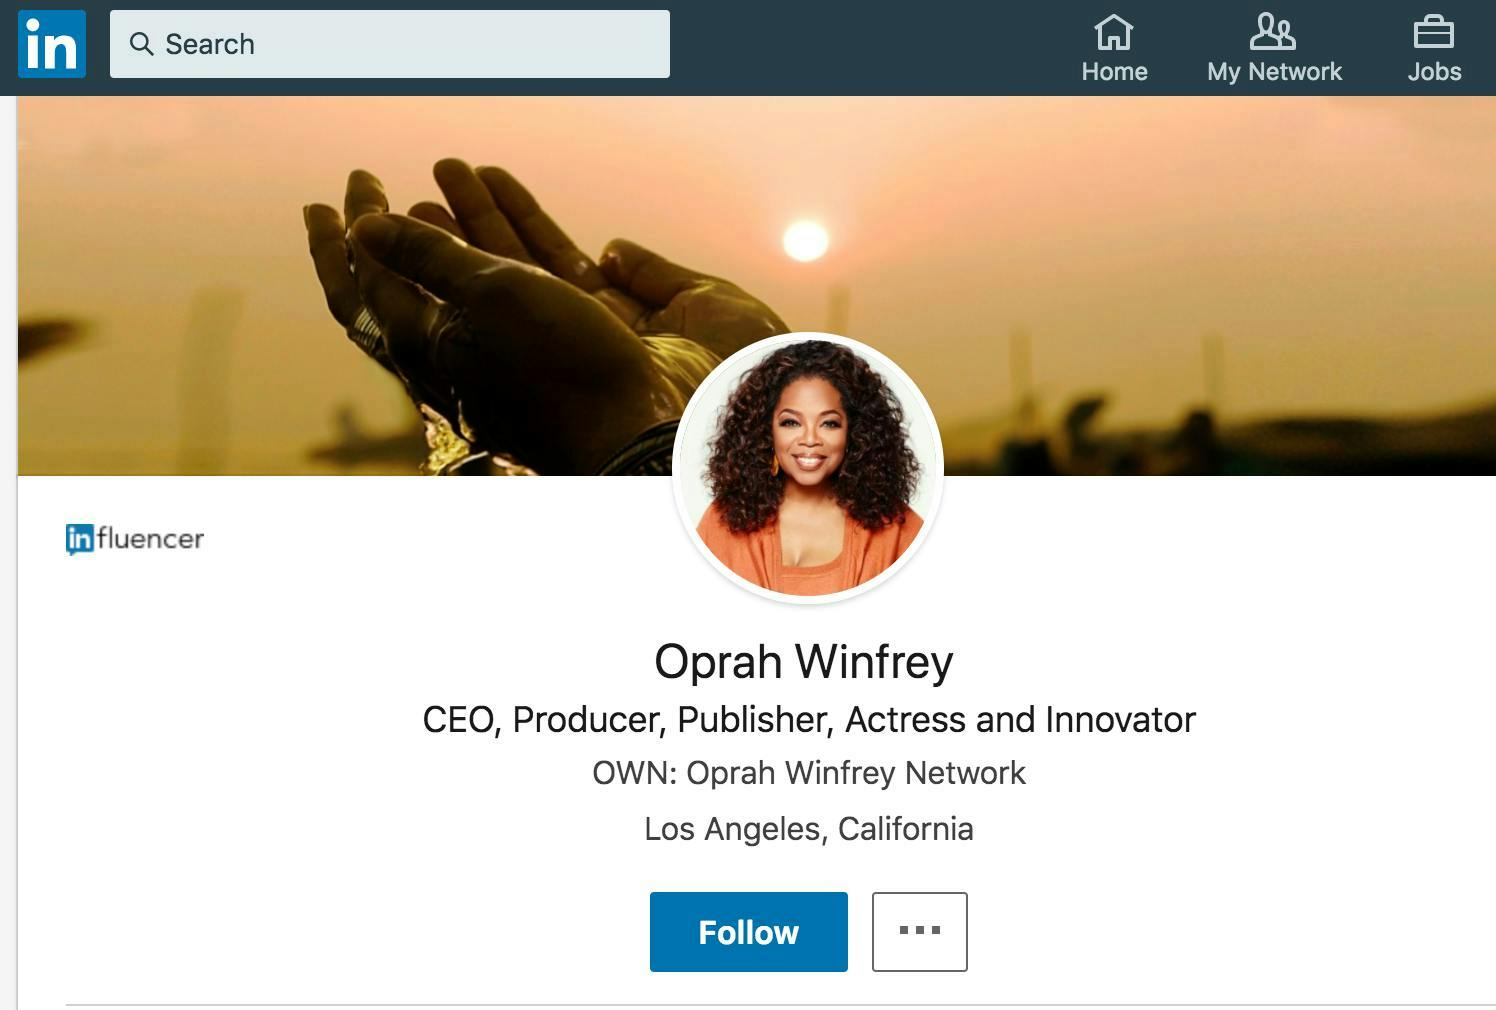 Oprah Winfrey's LinkedIn profile